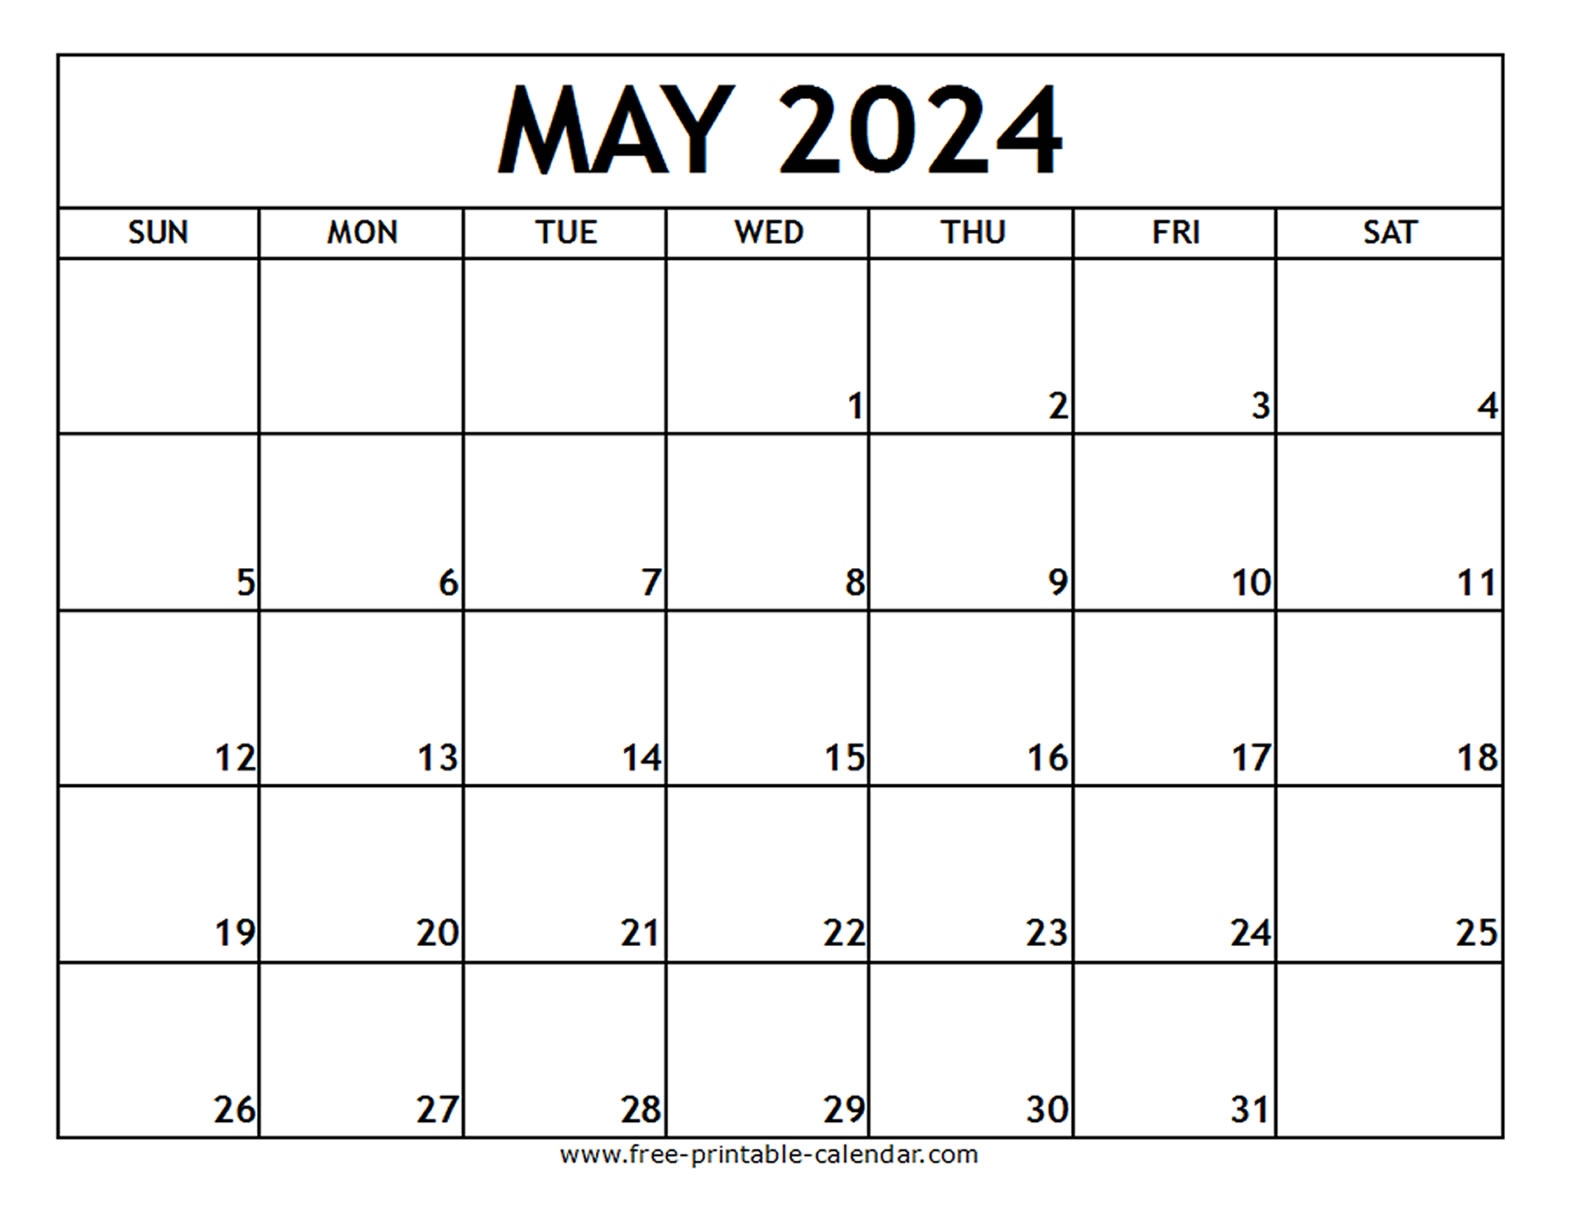 May 2024 Printable Calendar - Free-Printable-Calendar inside Free Printable Calendar 2024 May June July August